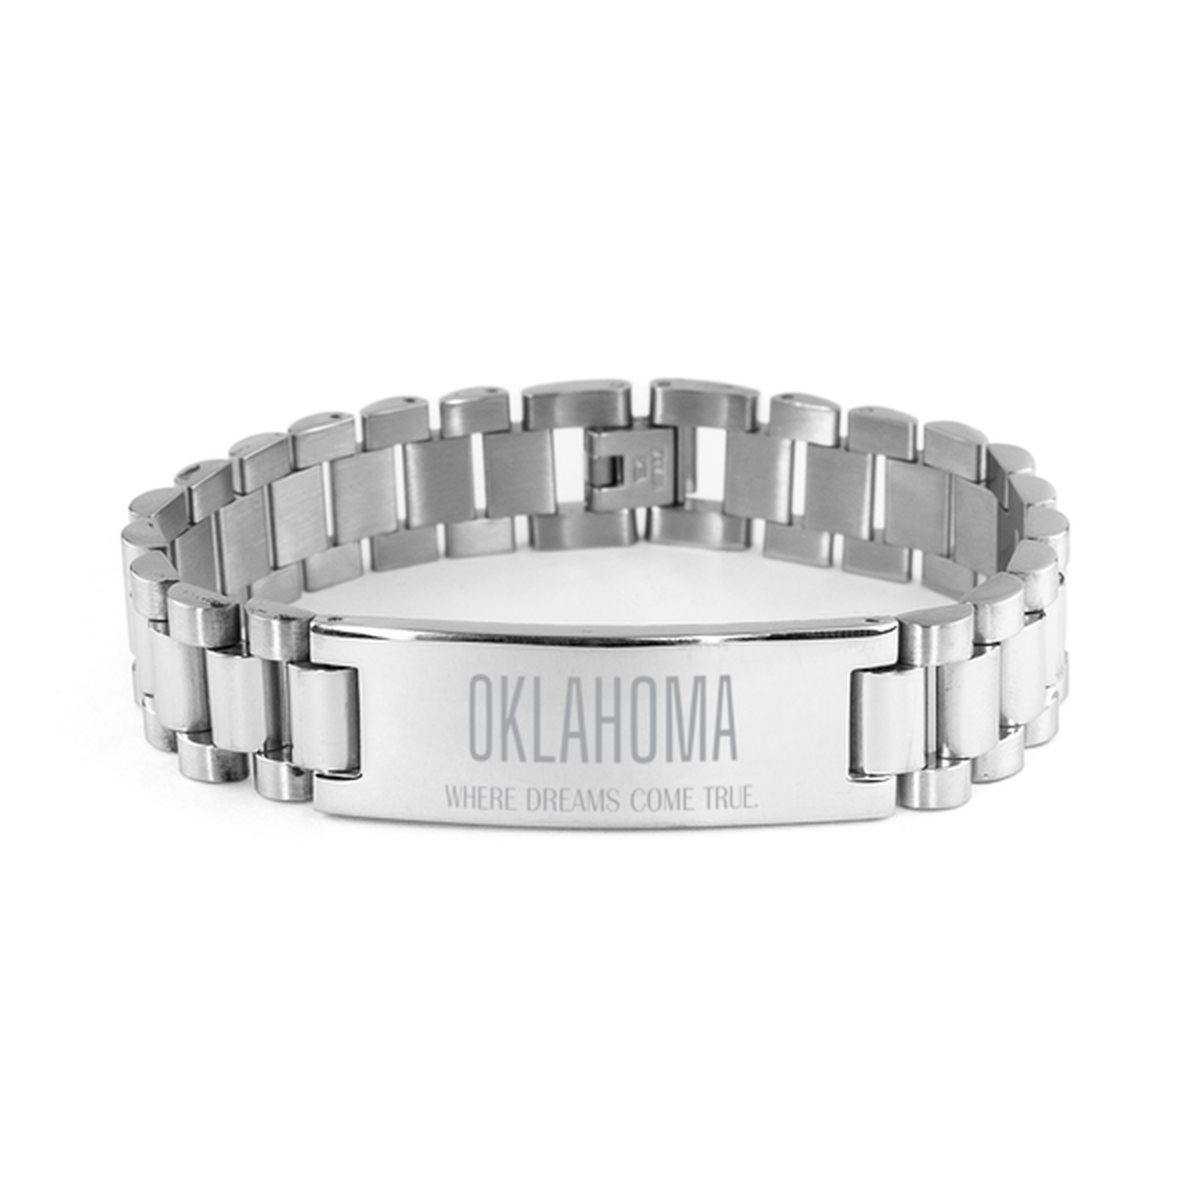 Love Oklahoma State Ladder Stainless Steel Bracelet, Oklahoma Where dreams come true, Birthday Inspirational Gifts For Oklahoma Men, Women, Friends